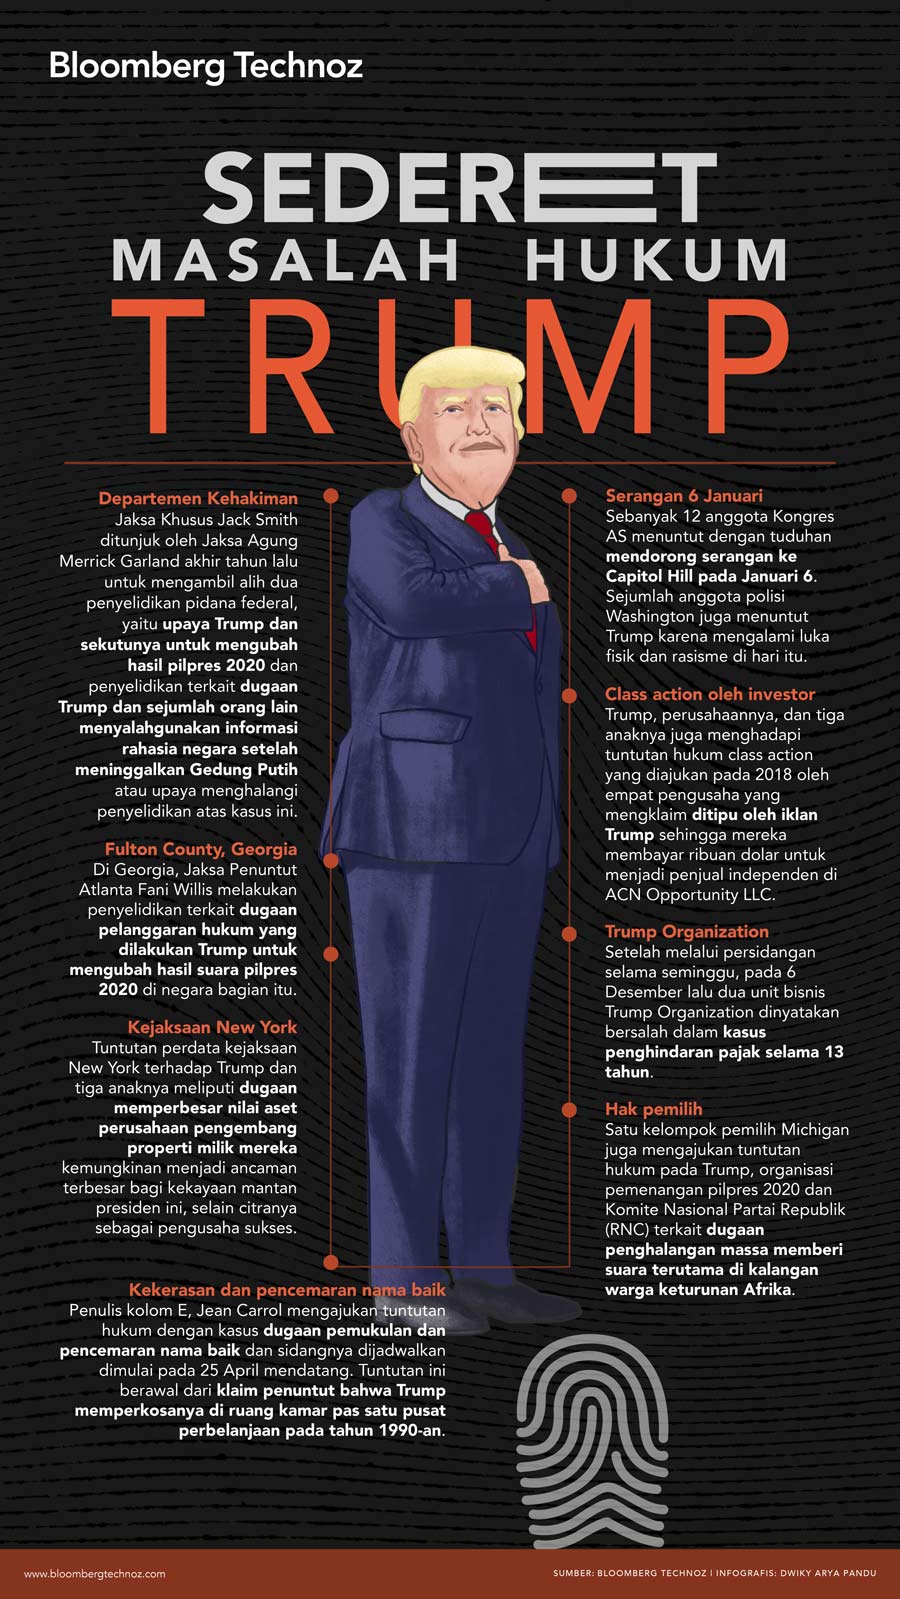 Sederet masalah hukum Donald Trump (Infografis/Bloomberg Technoz)